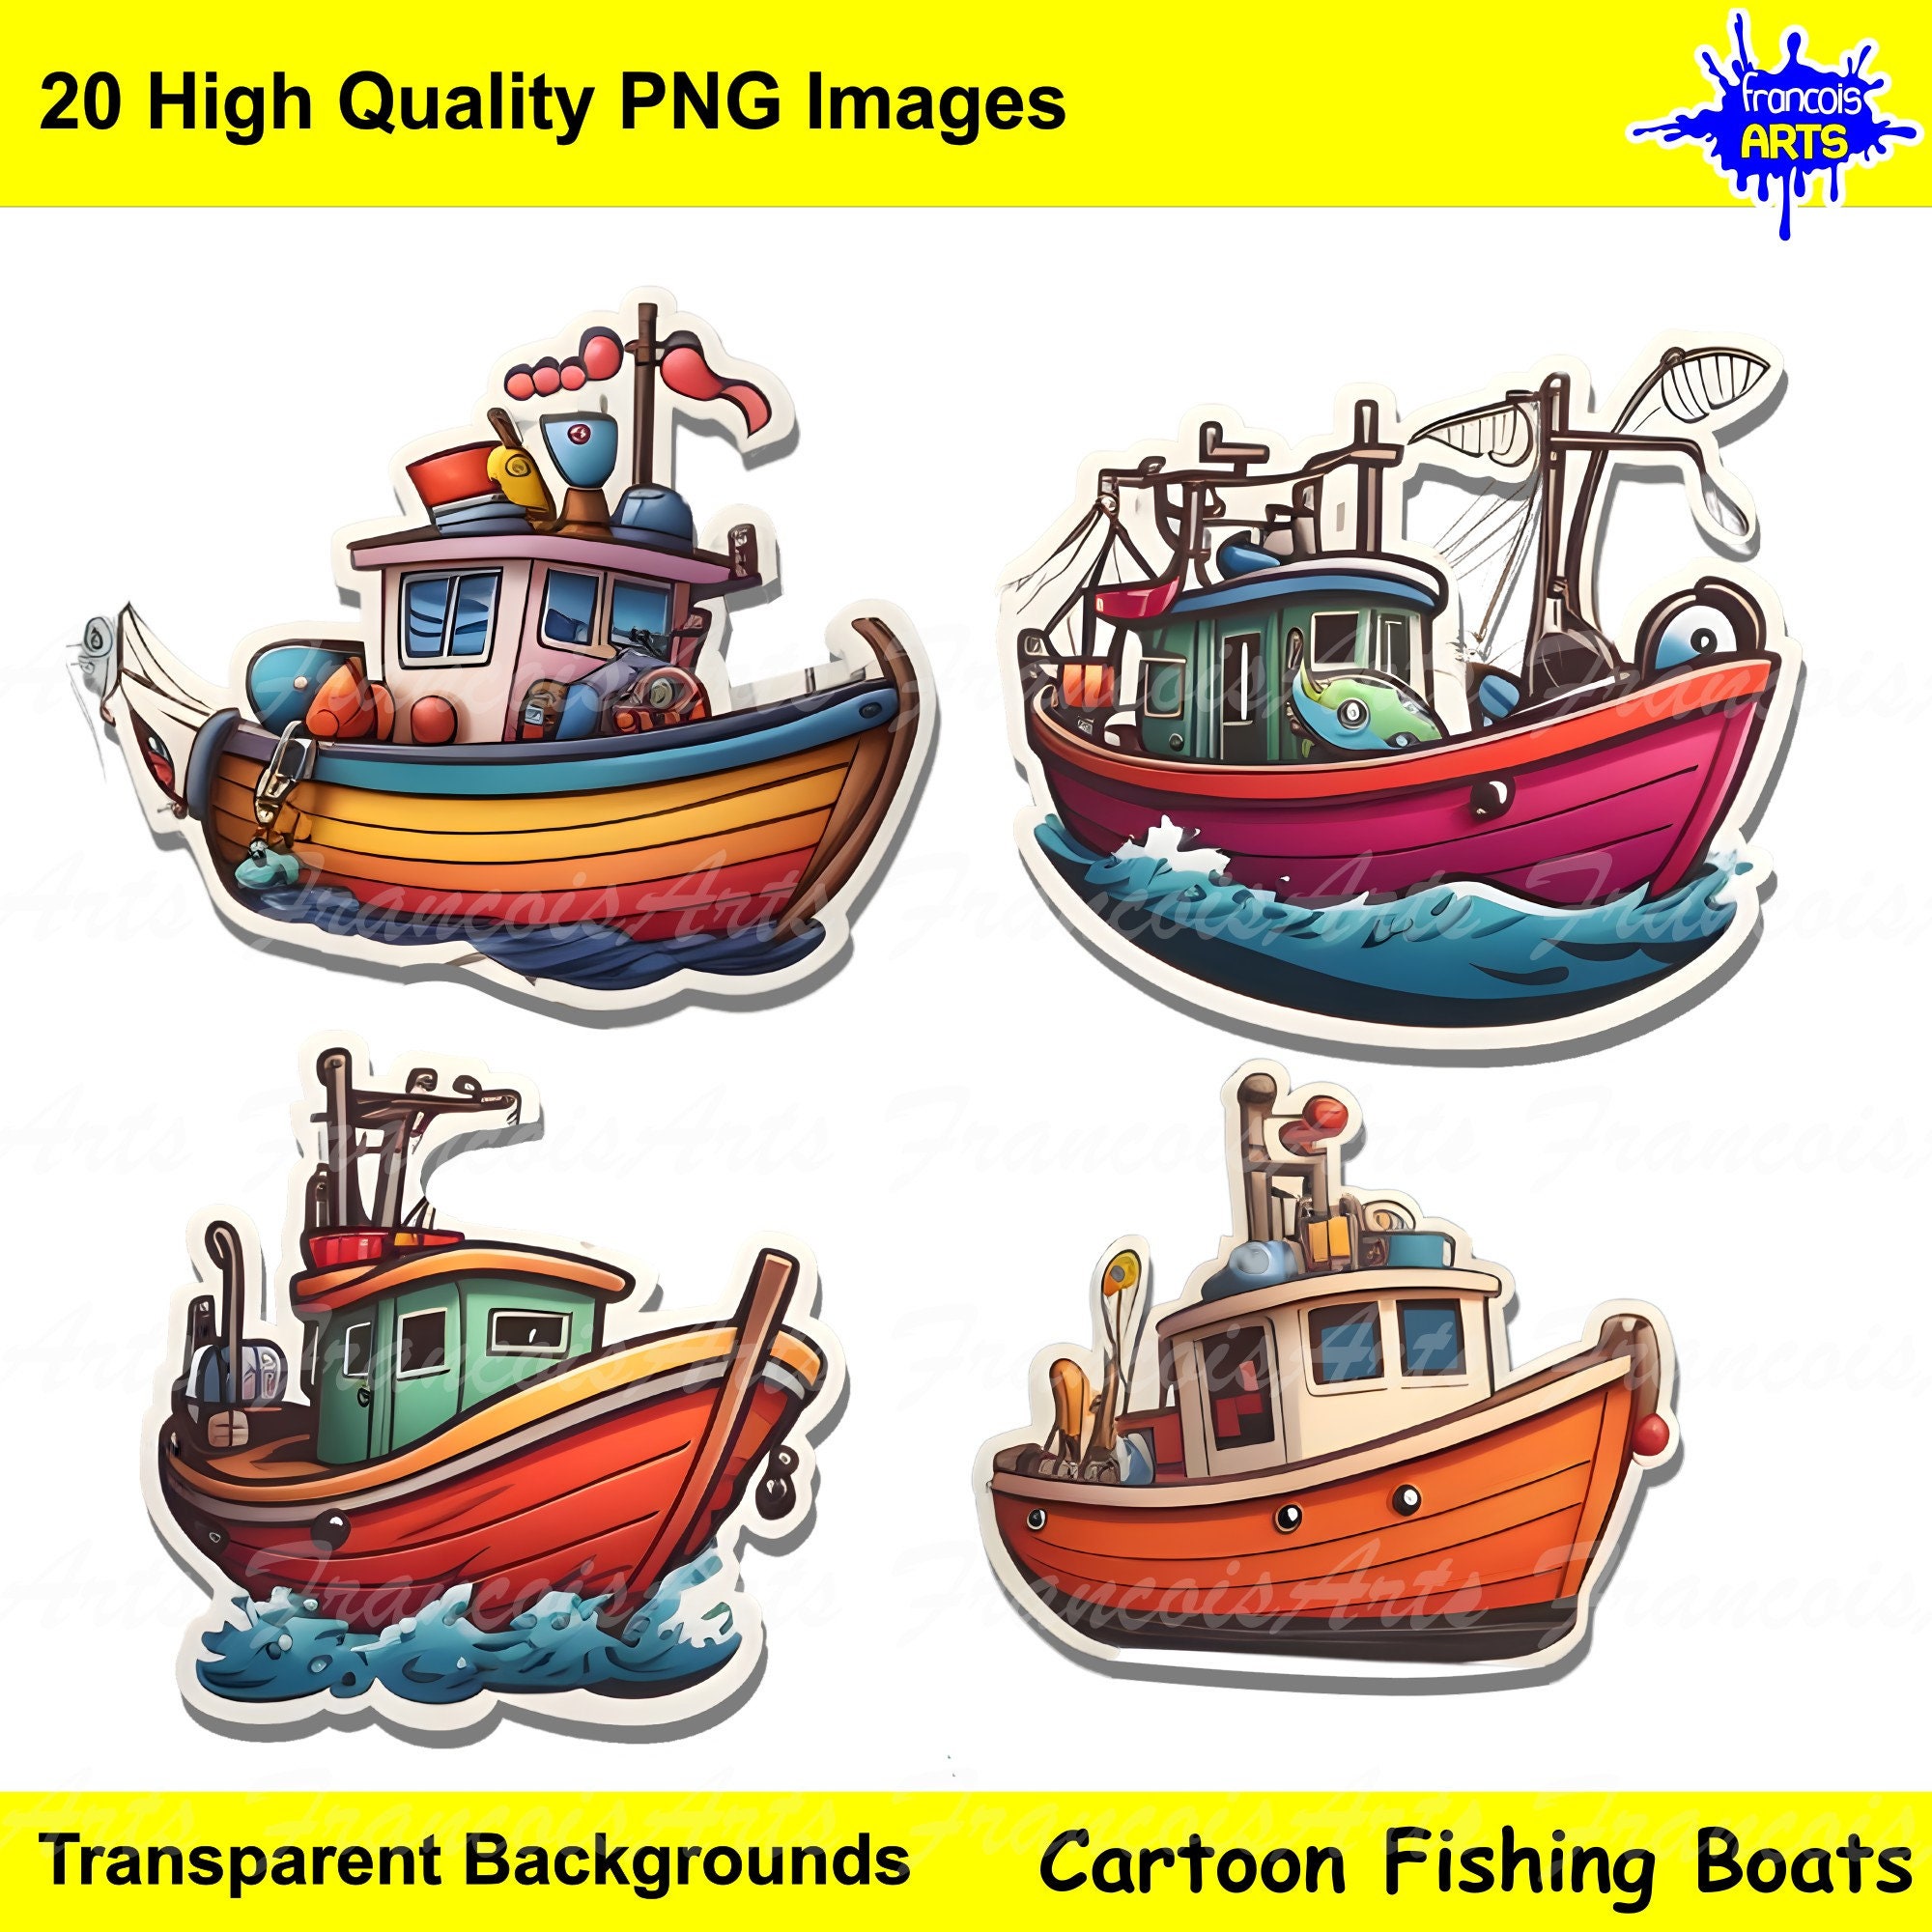 Motorboat Drawings for Sale - Pixels